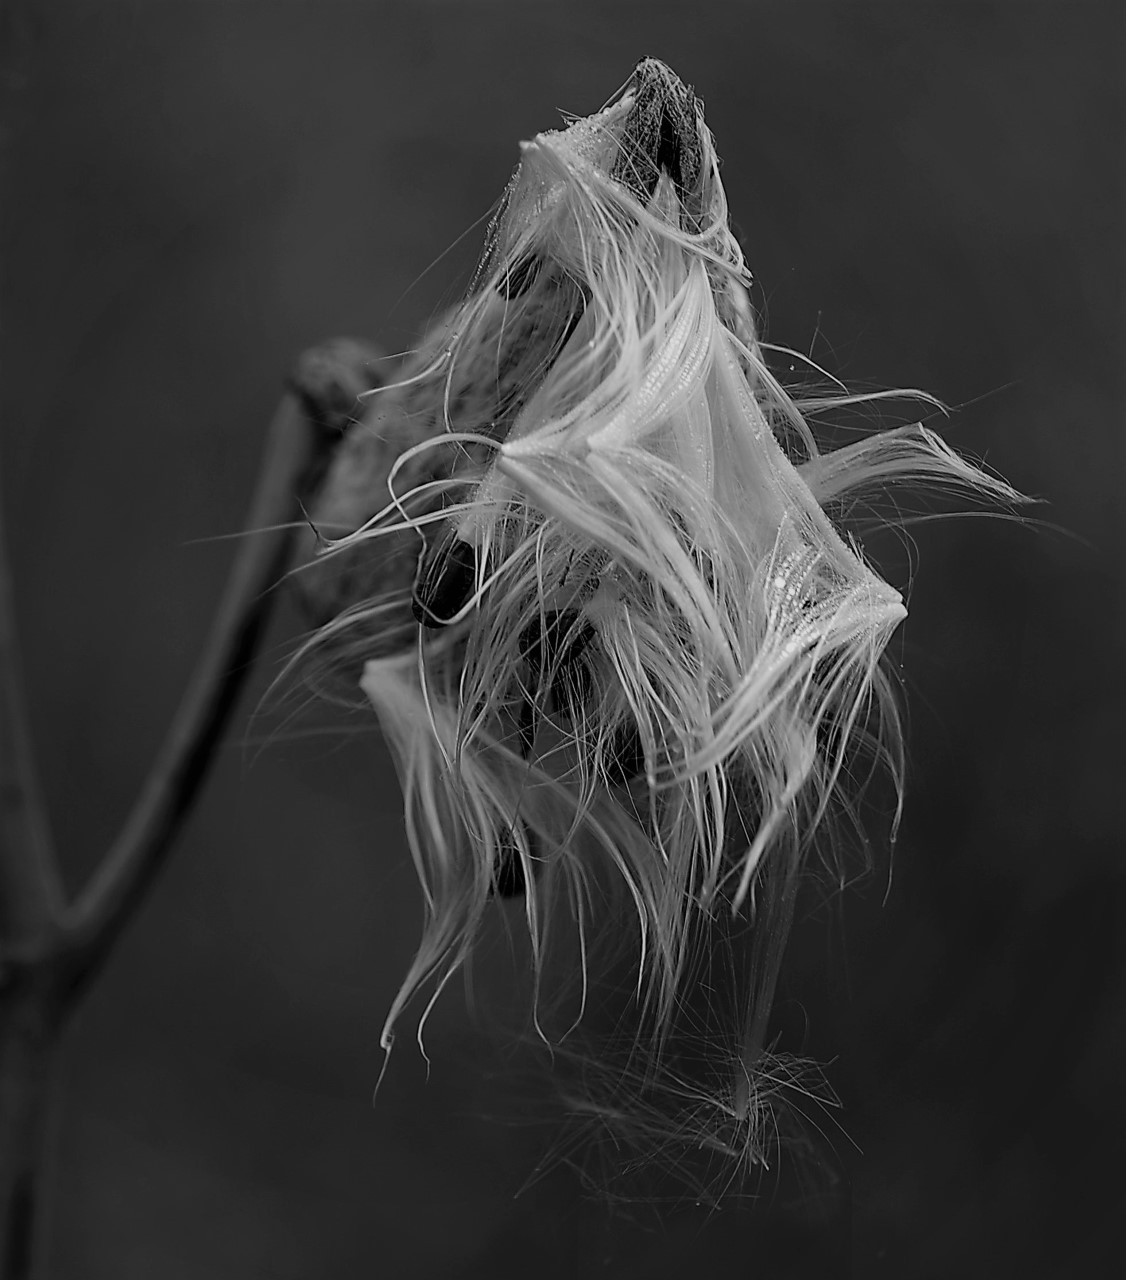 Milkweed Seed by Jay Joseph